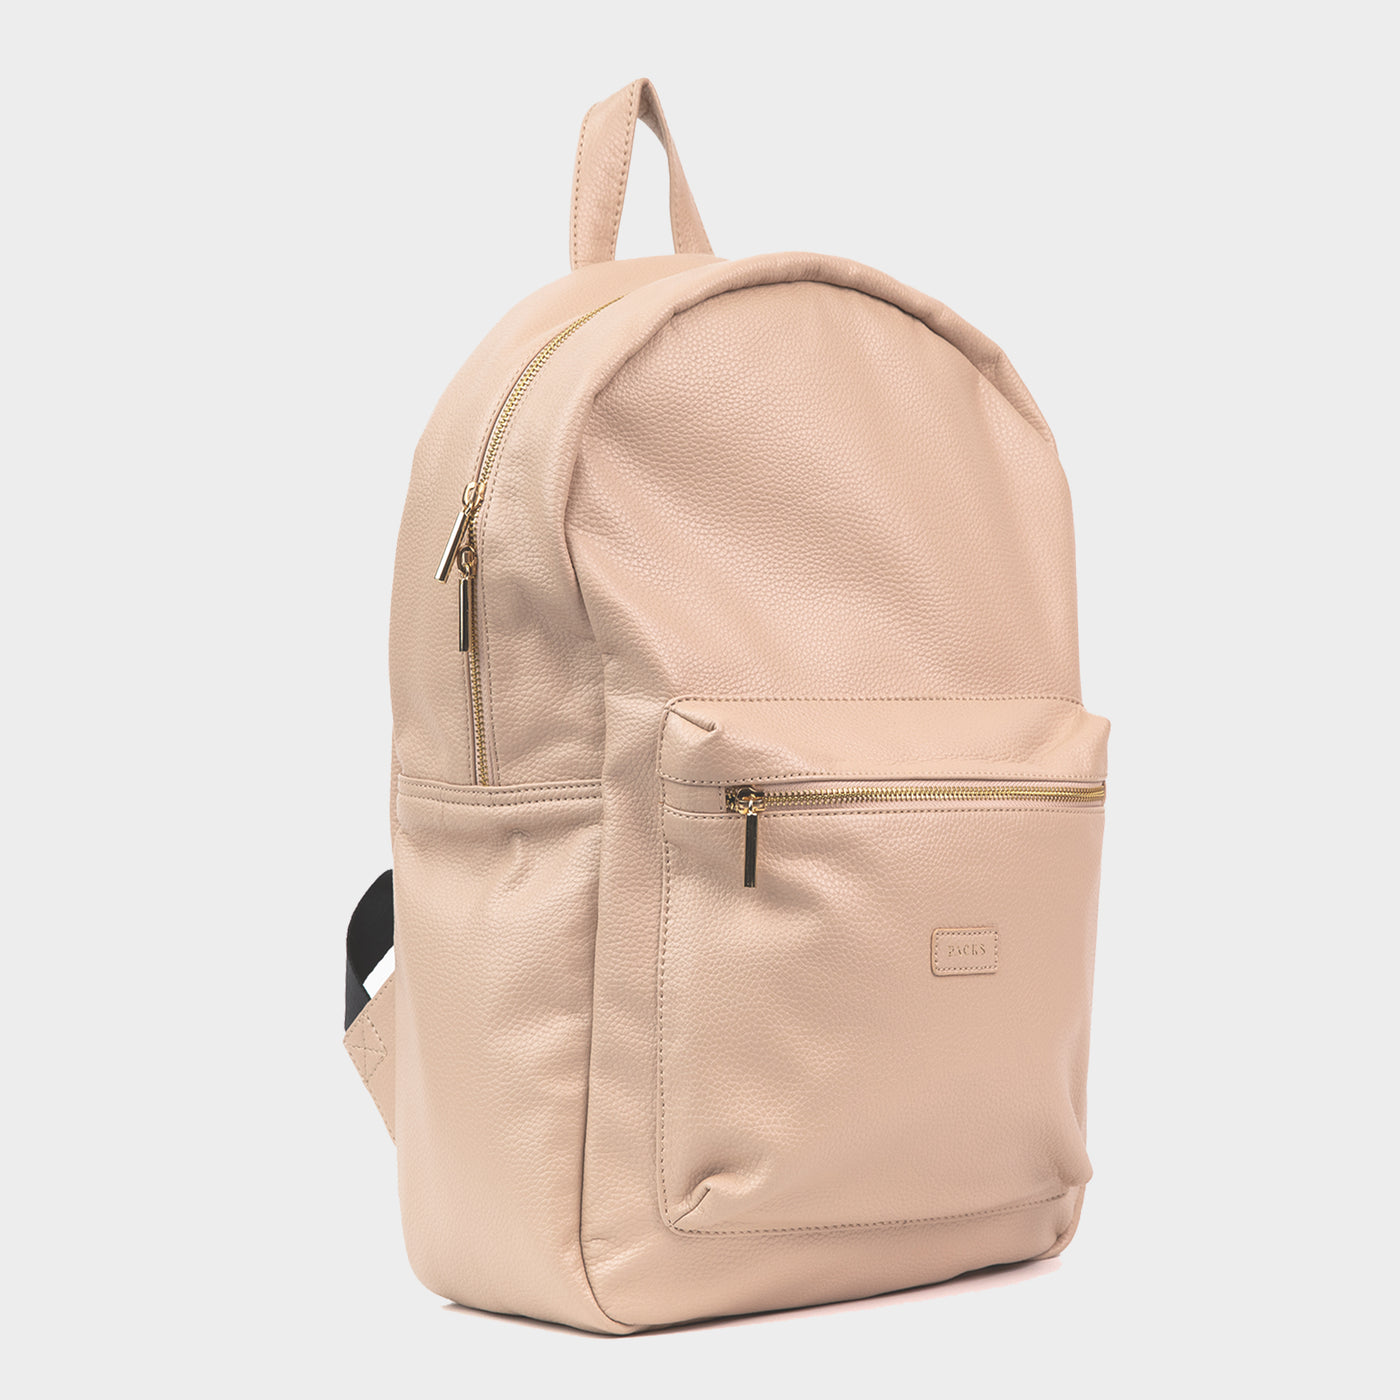 Mason Backpack - Packs